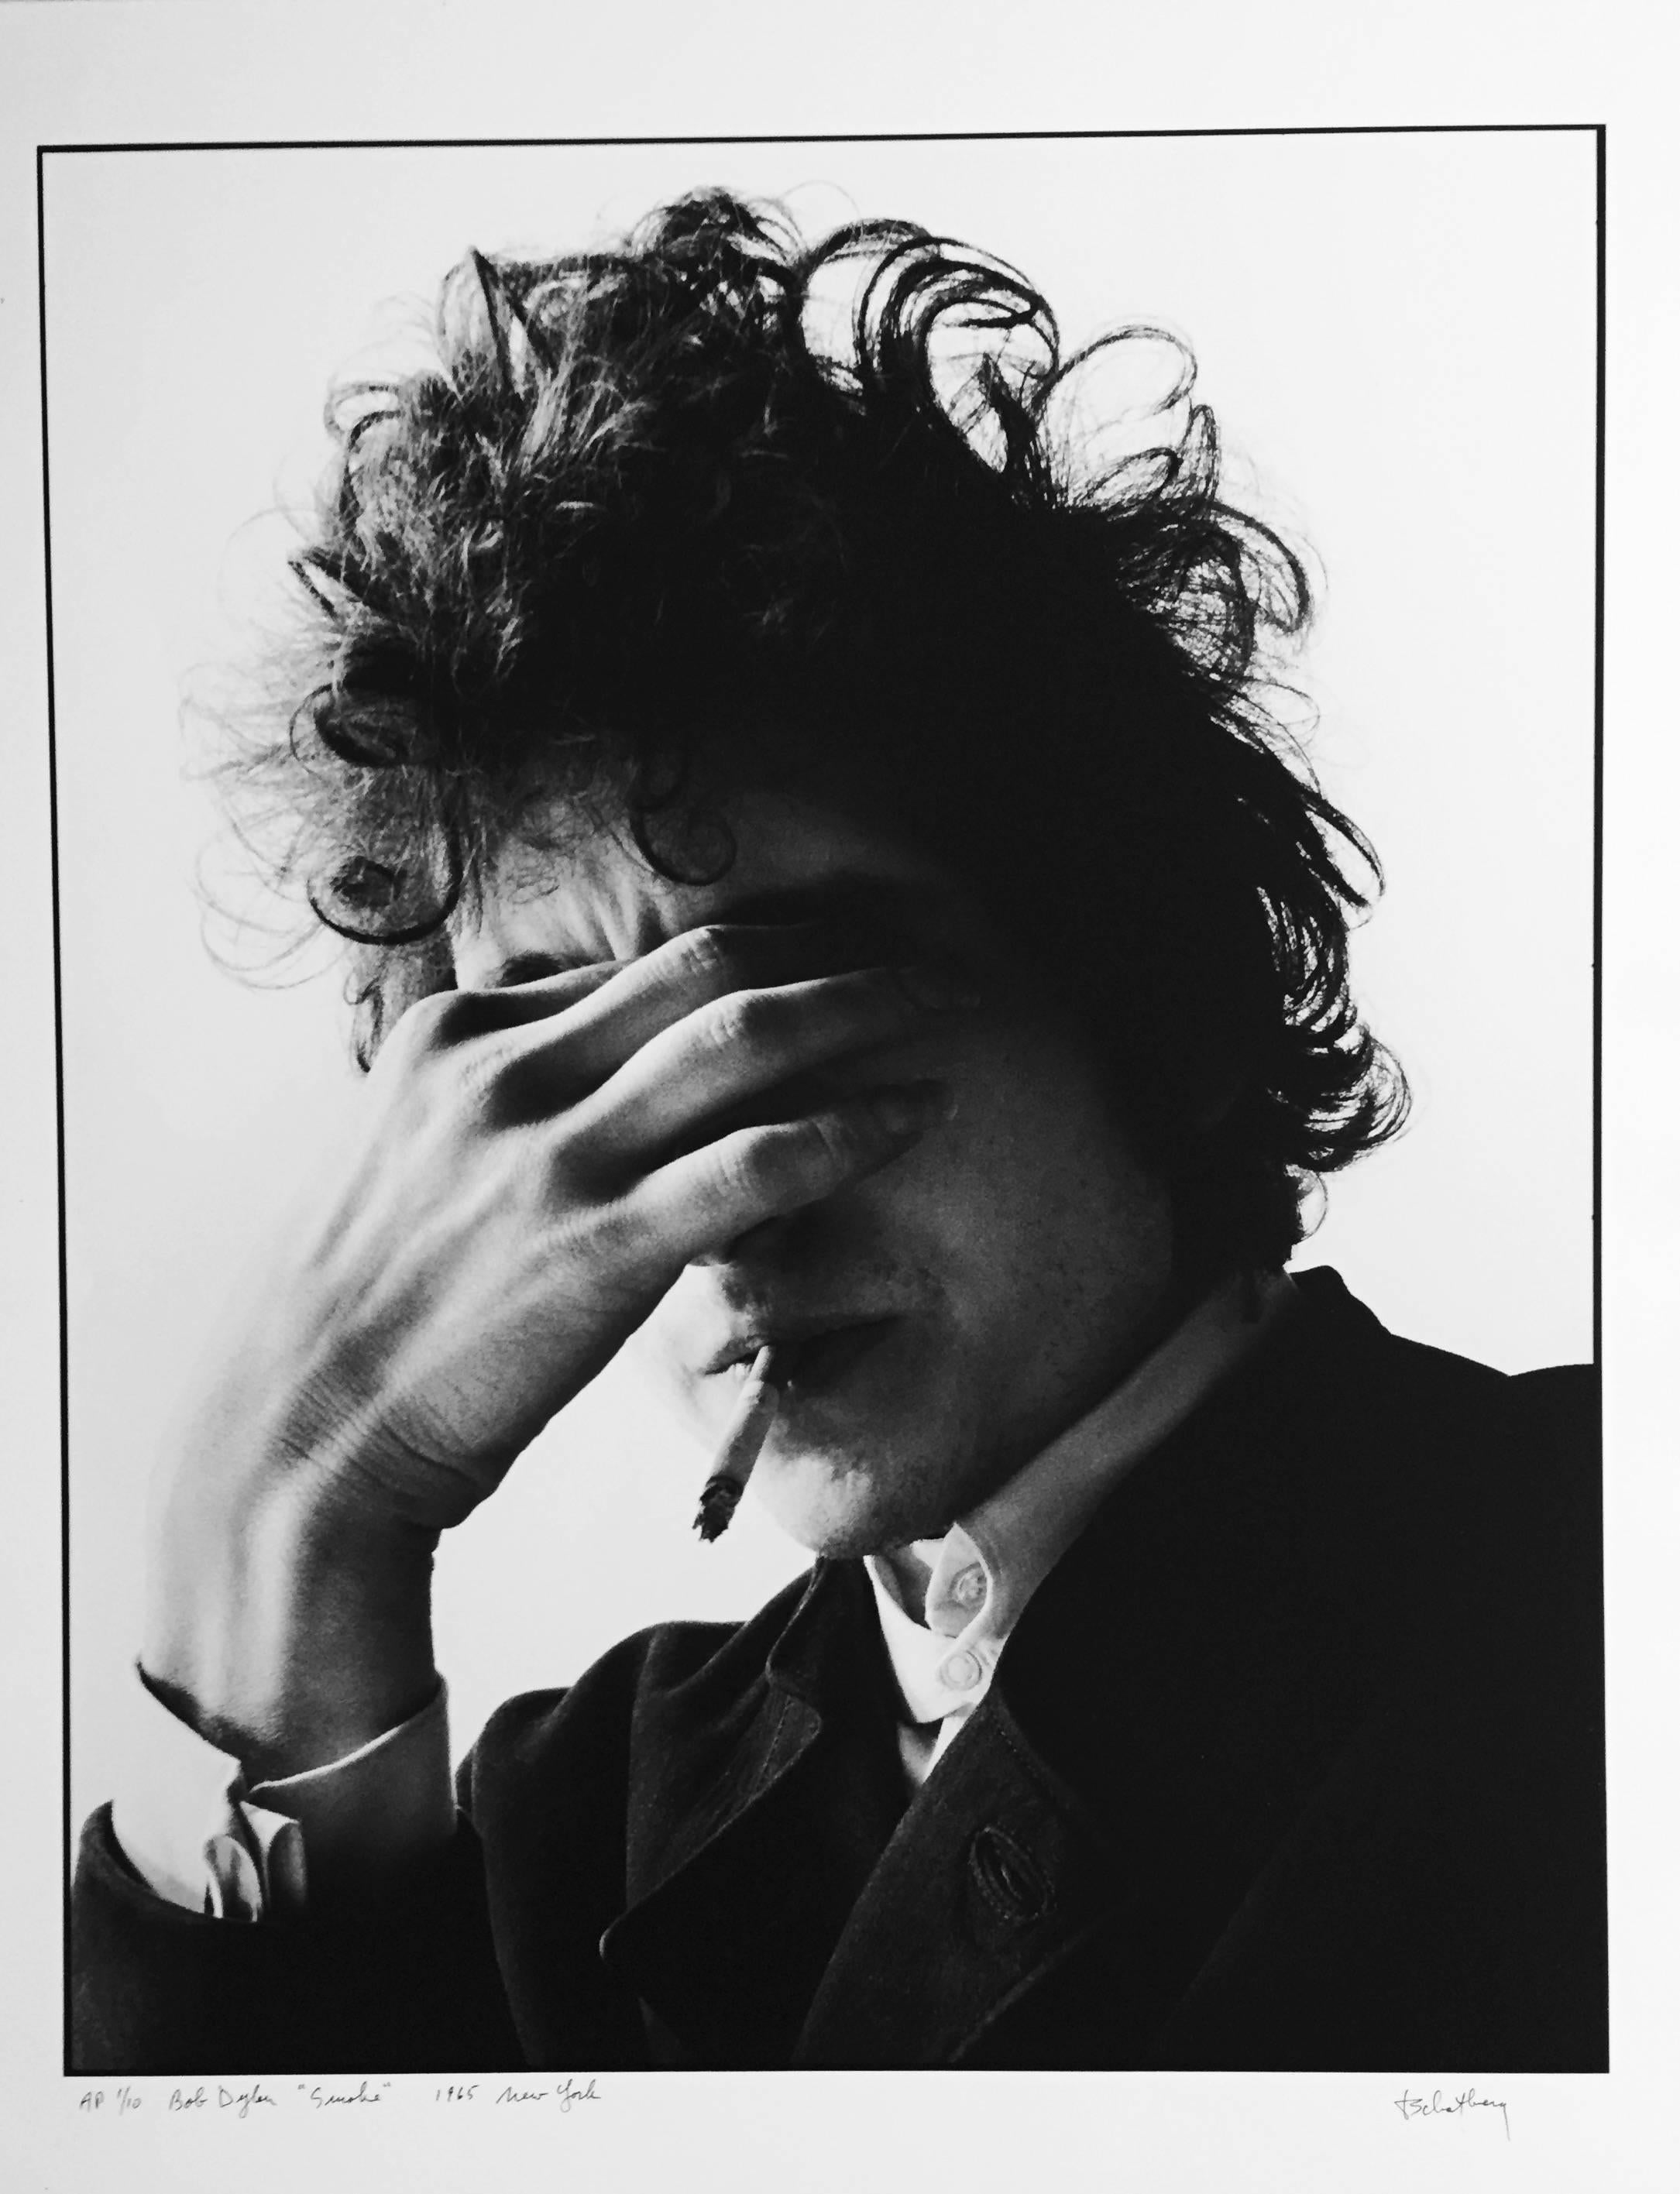 Jerry Schatzberg Black and White Photograph - Bob Dylan, "Smoke" New York 1965